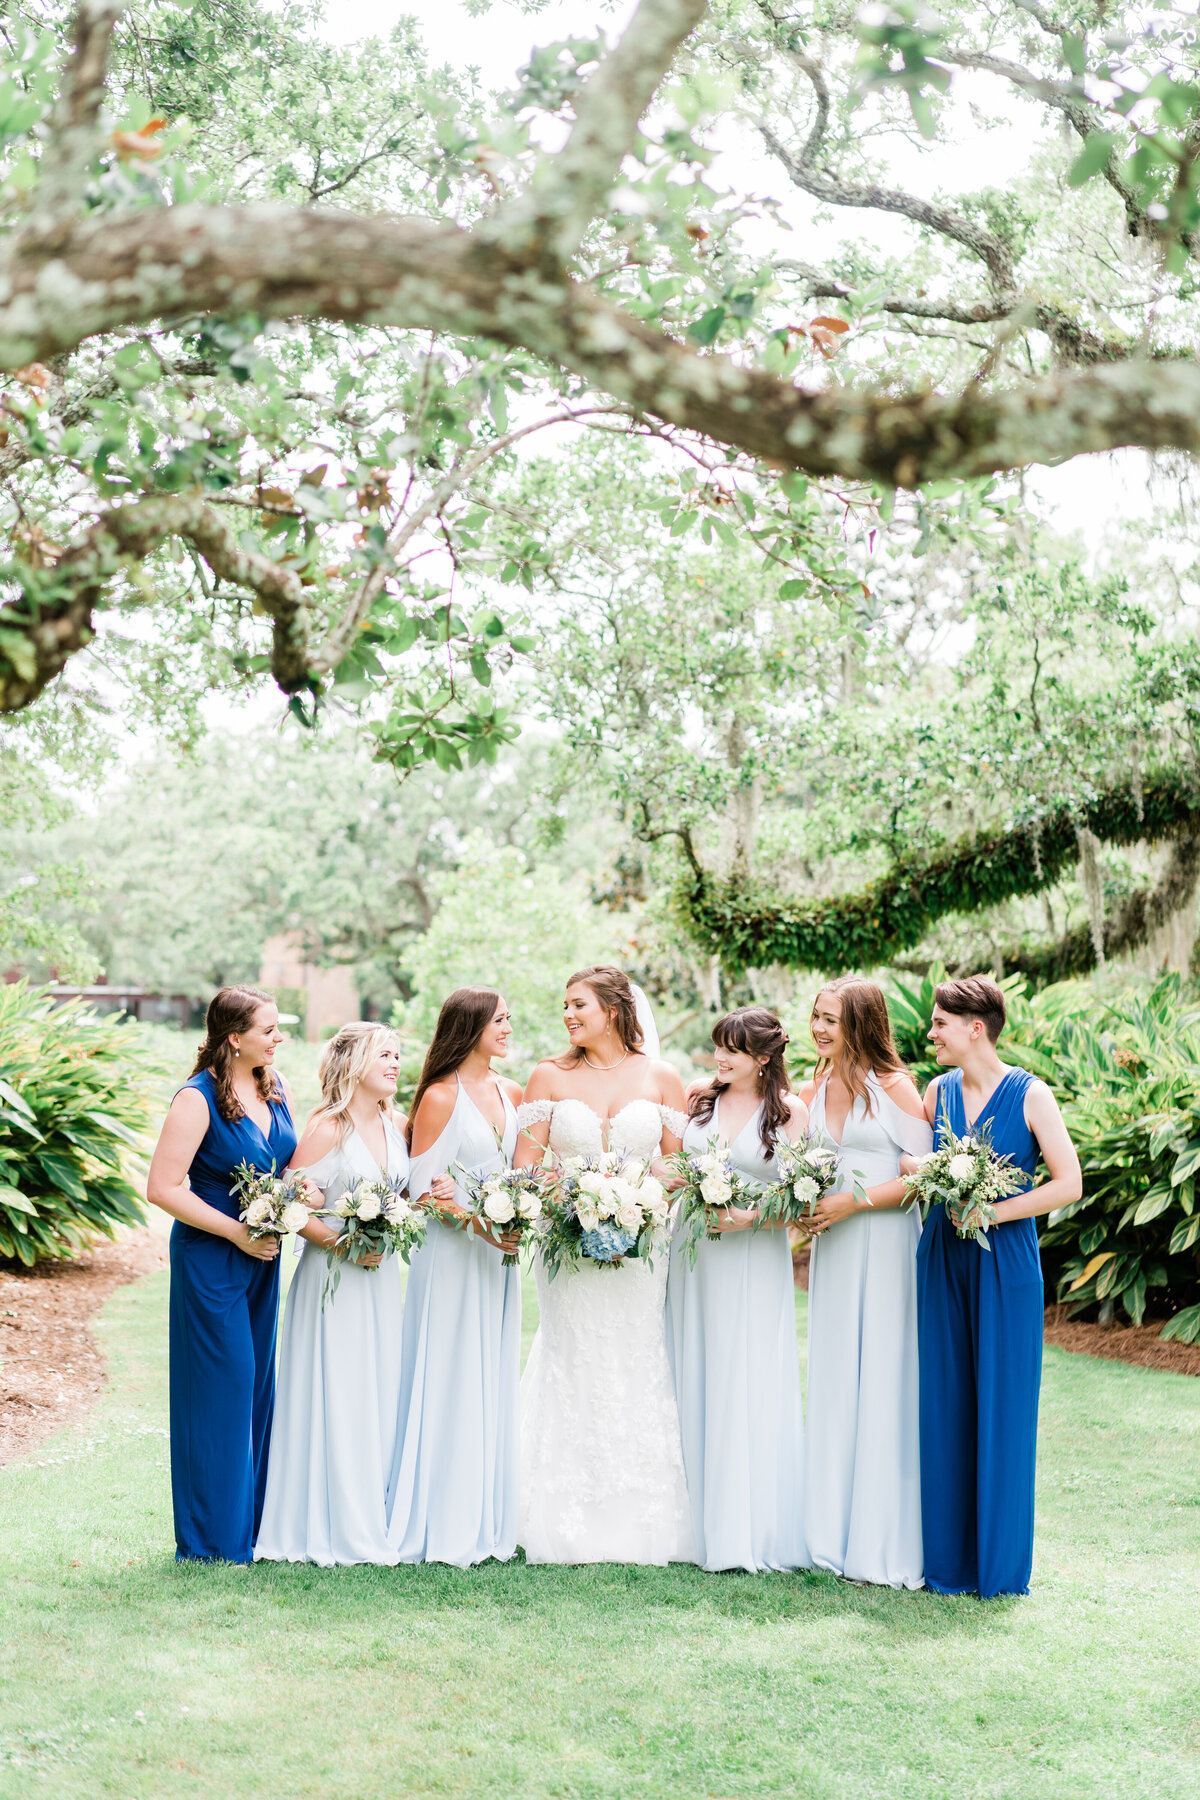 Bride with bridesmaids in blue